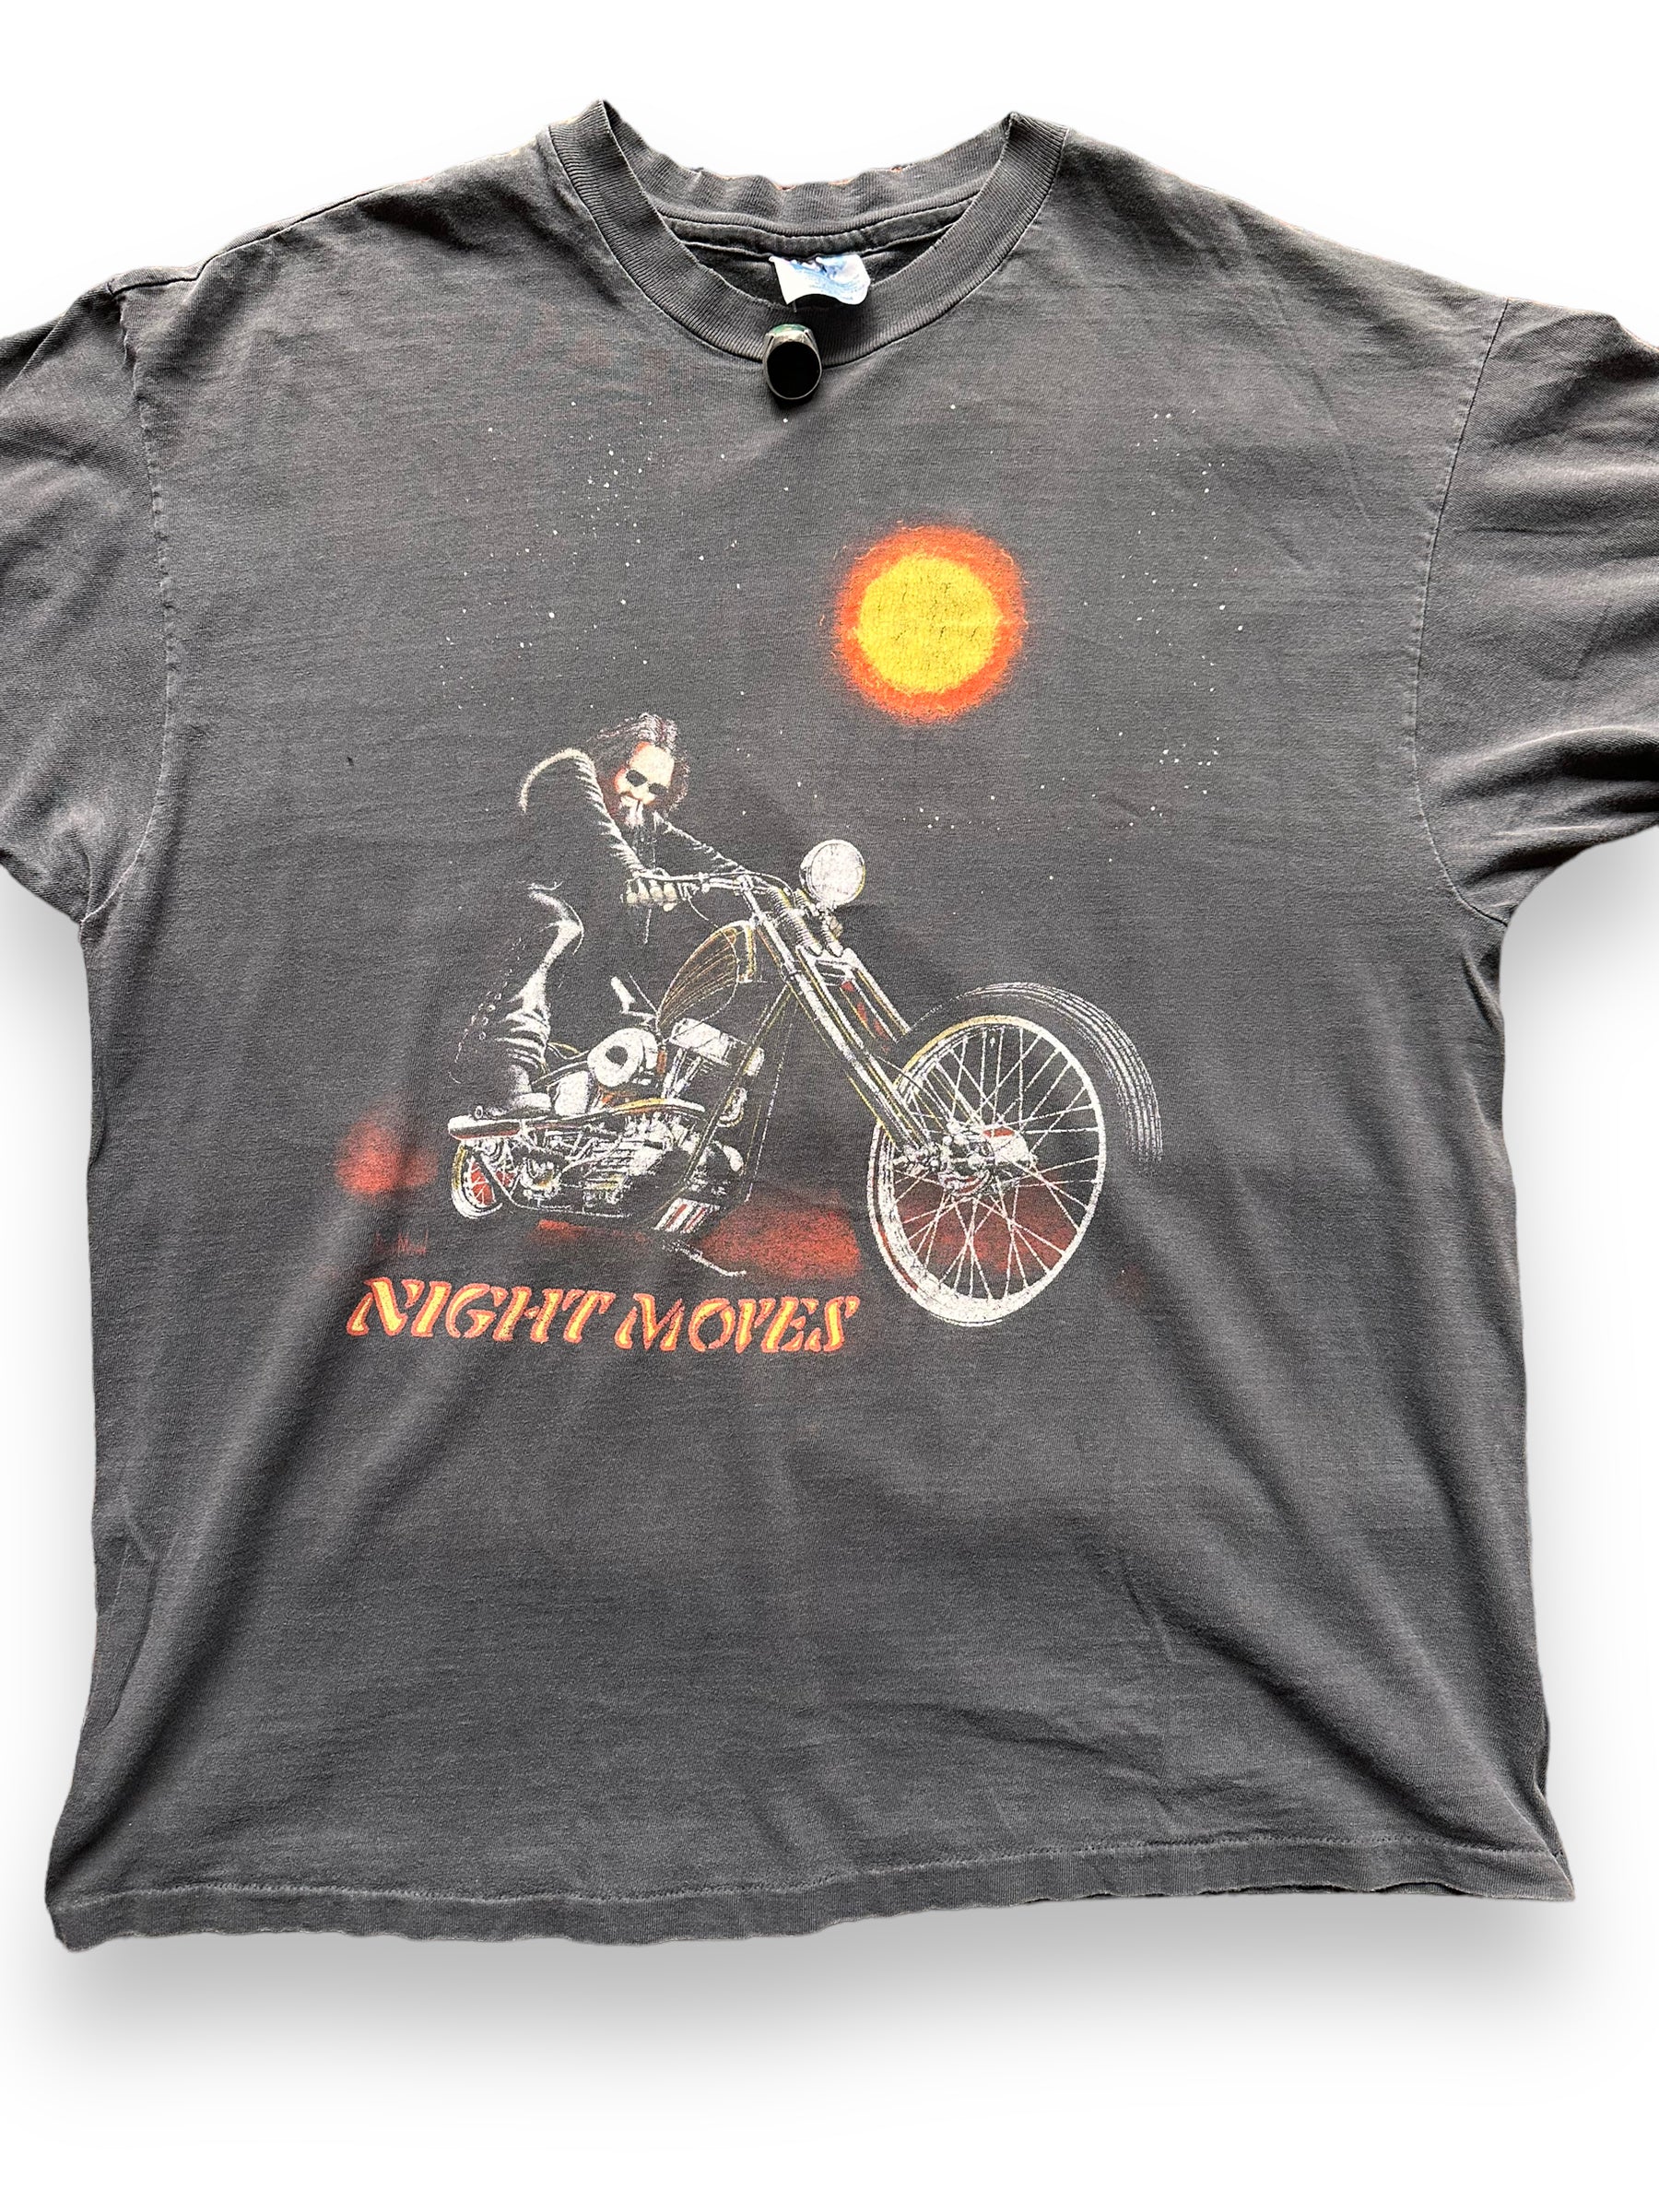 Vintage 1990 Easyriders x David Mann T Shirt “Night Moves” Price : 2,250  บาท ($75) Size L : 19 x 29 ผ้า 100 cotton สภาพดี ตะเข็บเดี่ยว…